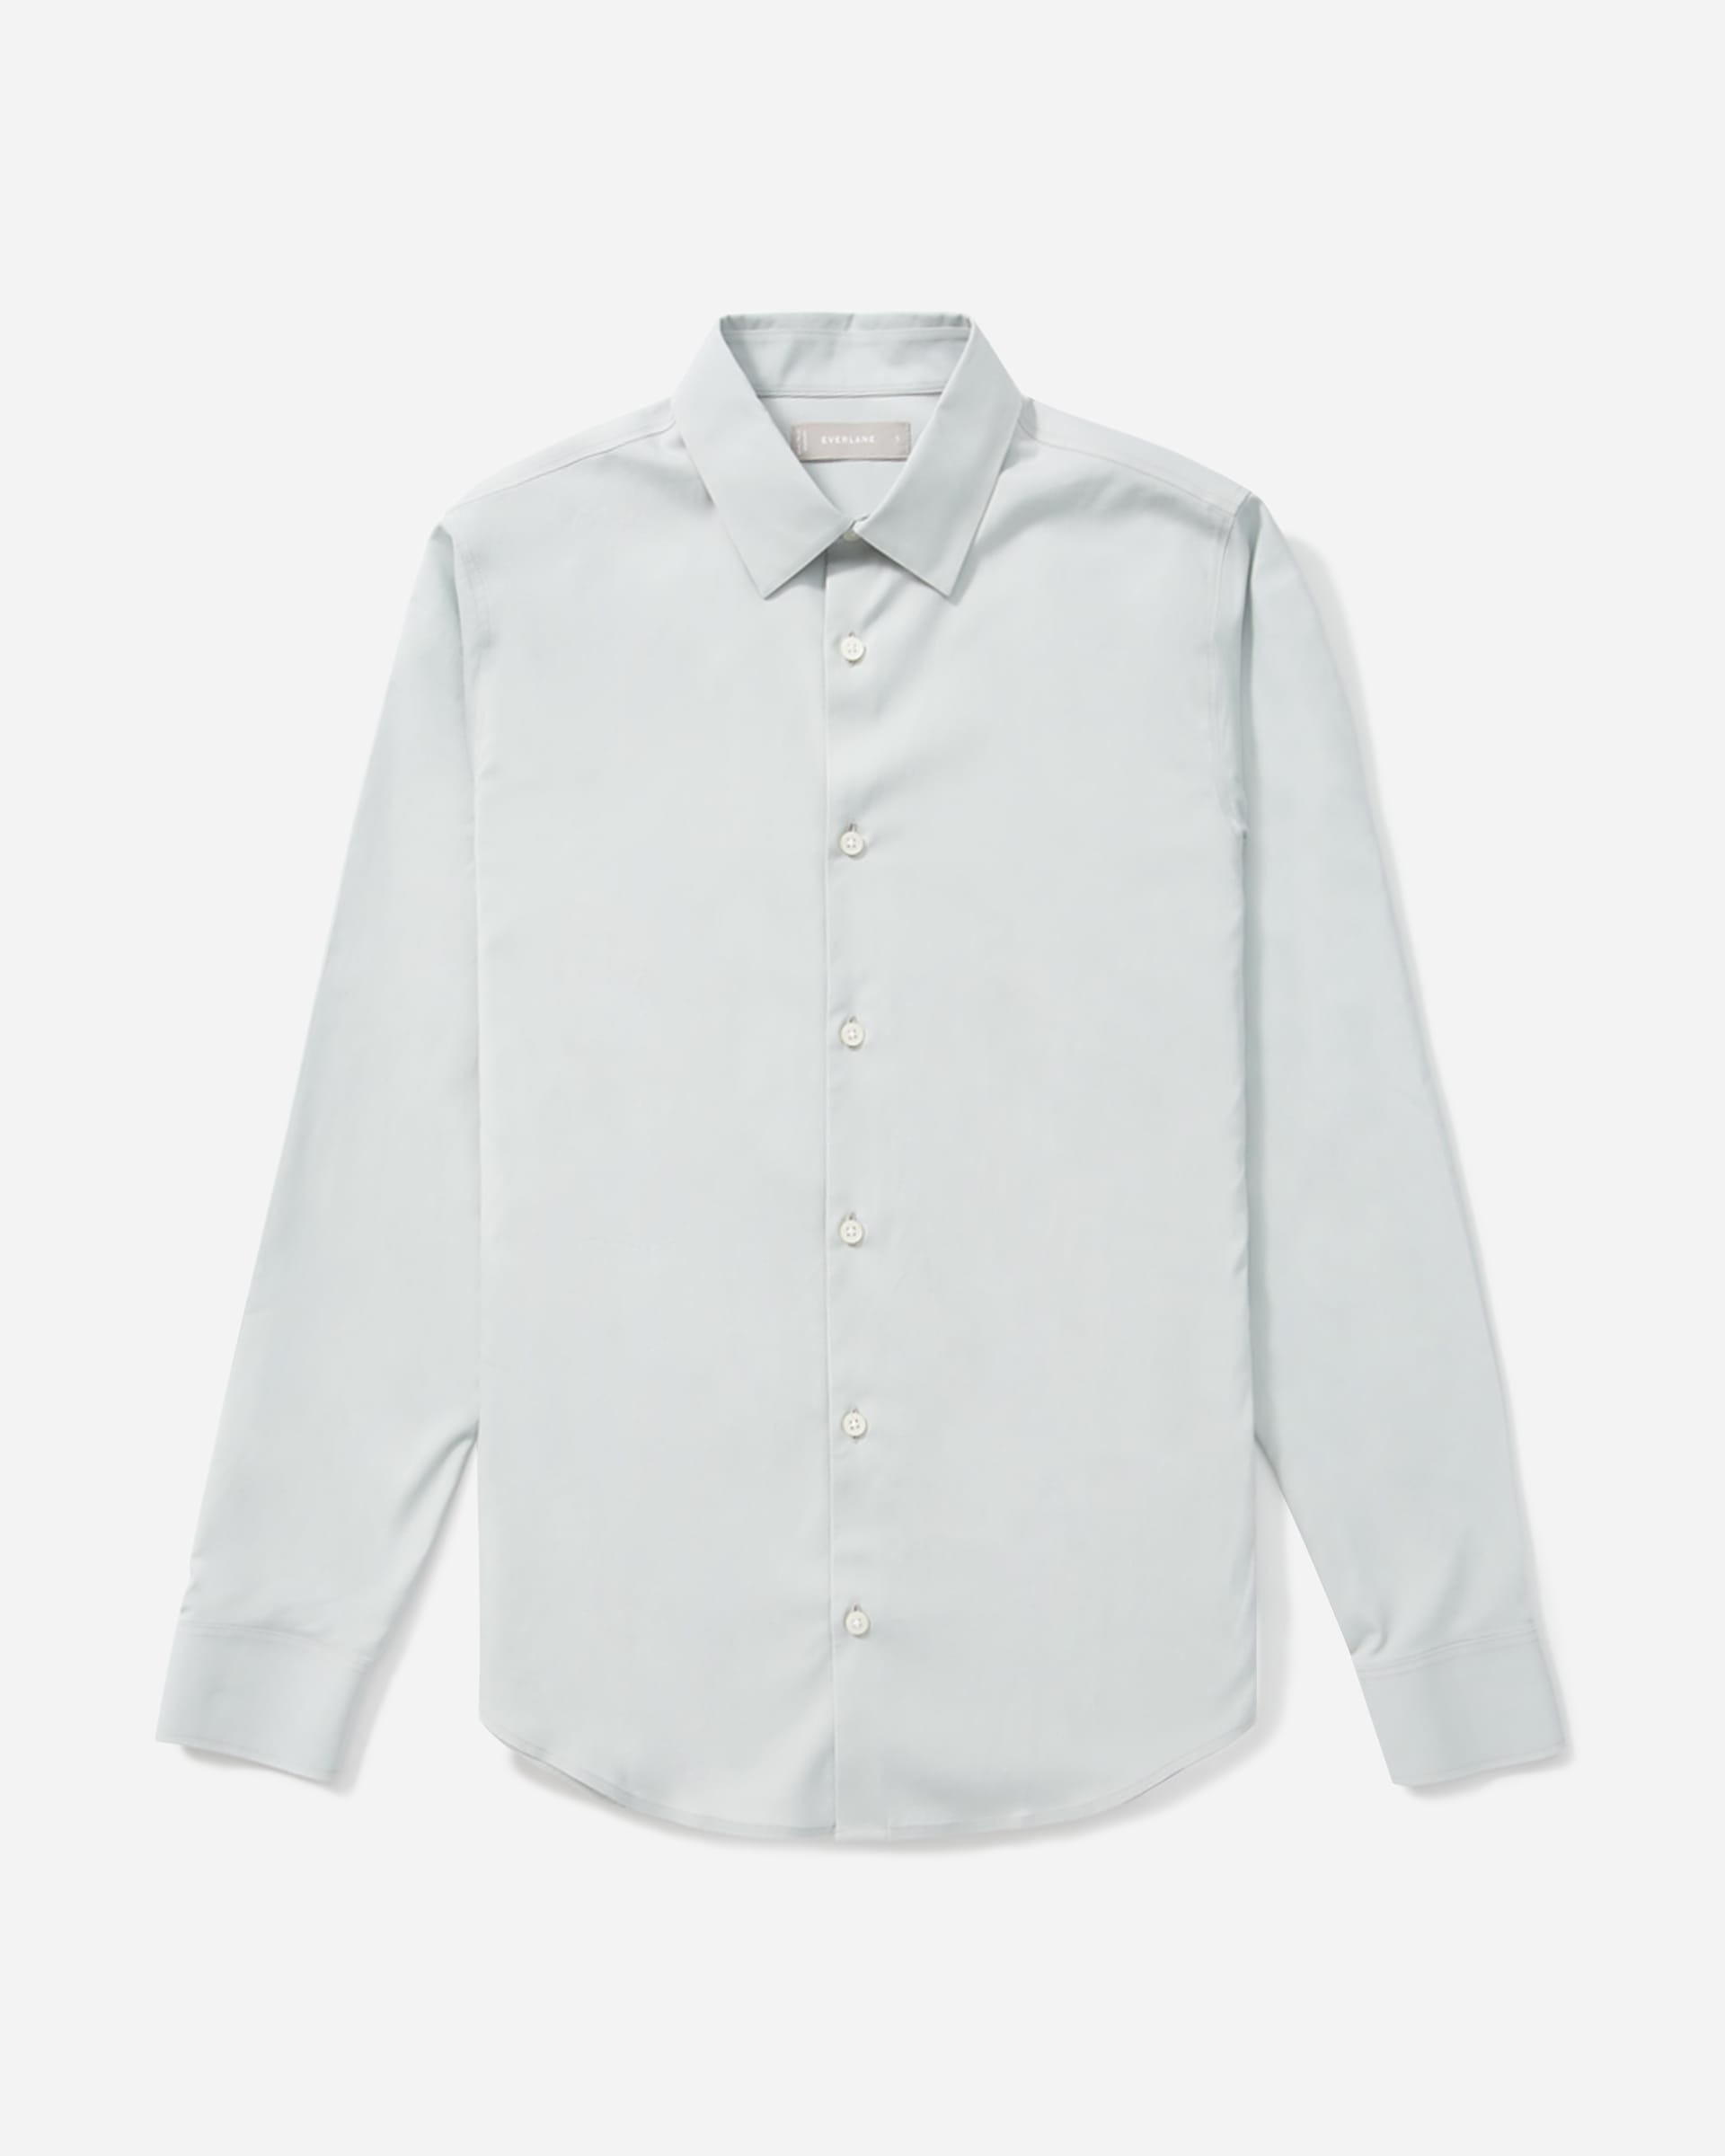 The Slim Fit Performance Shirt Celadon Grey – Everlane